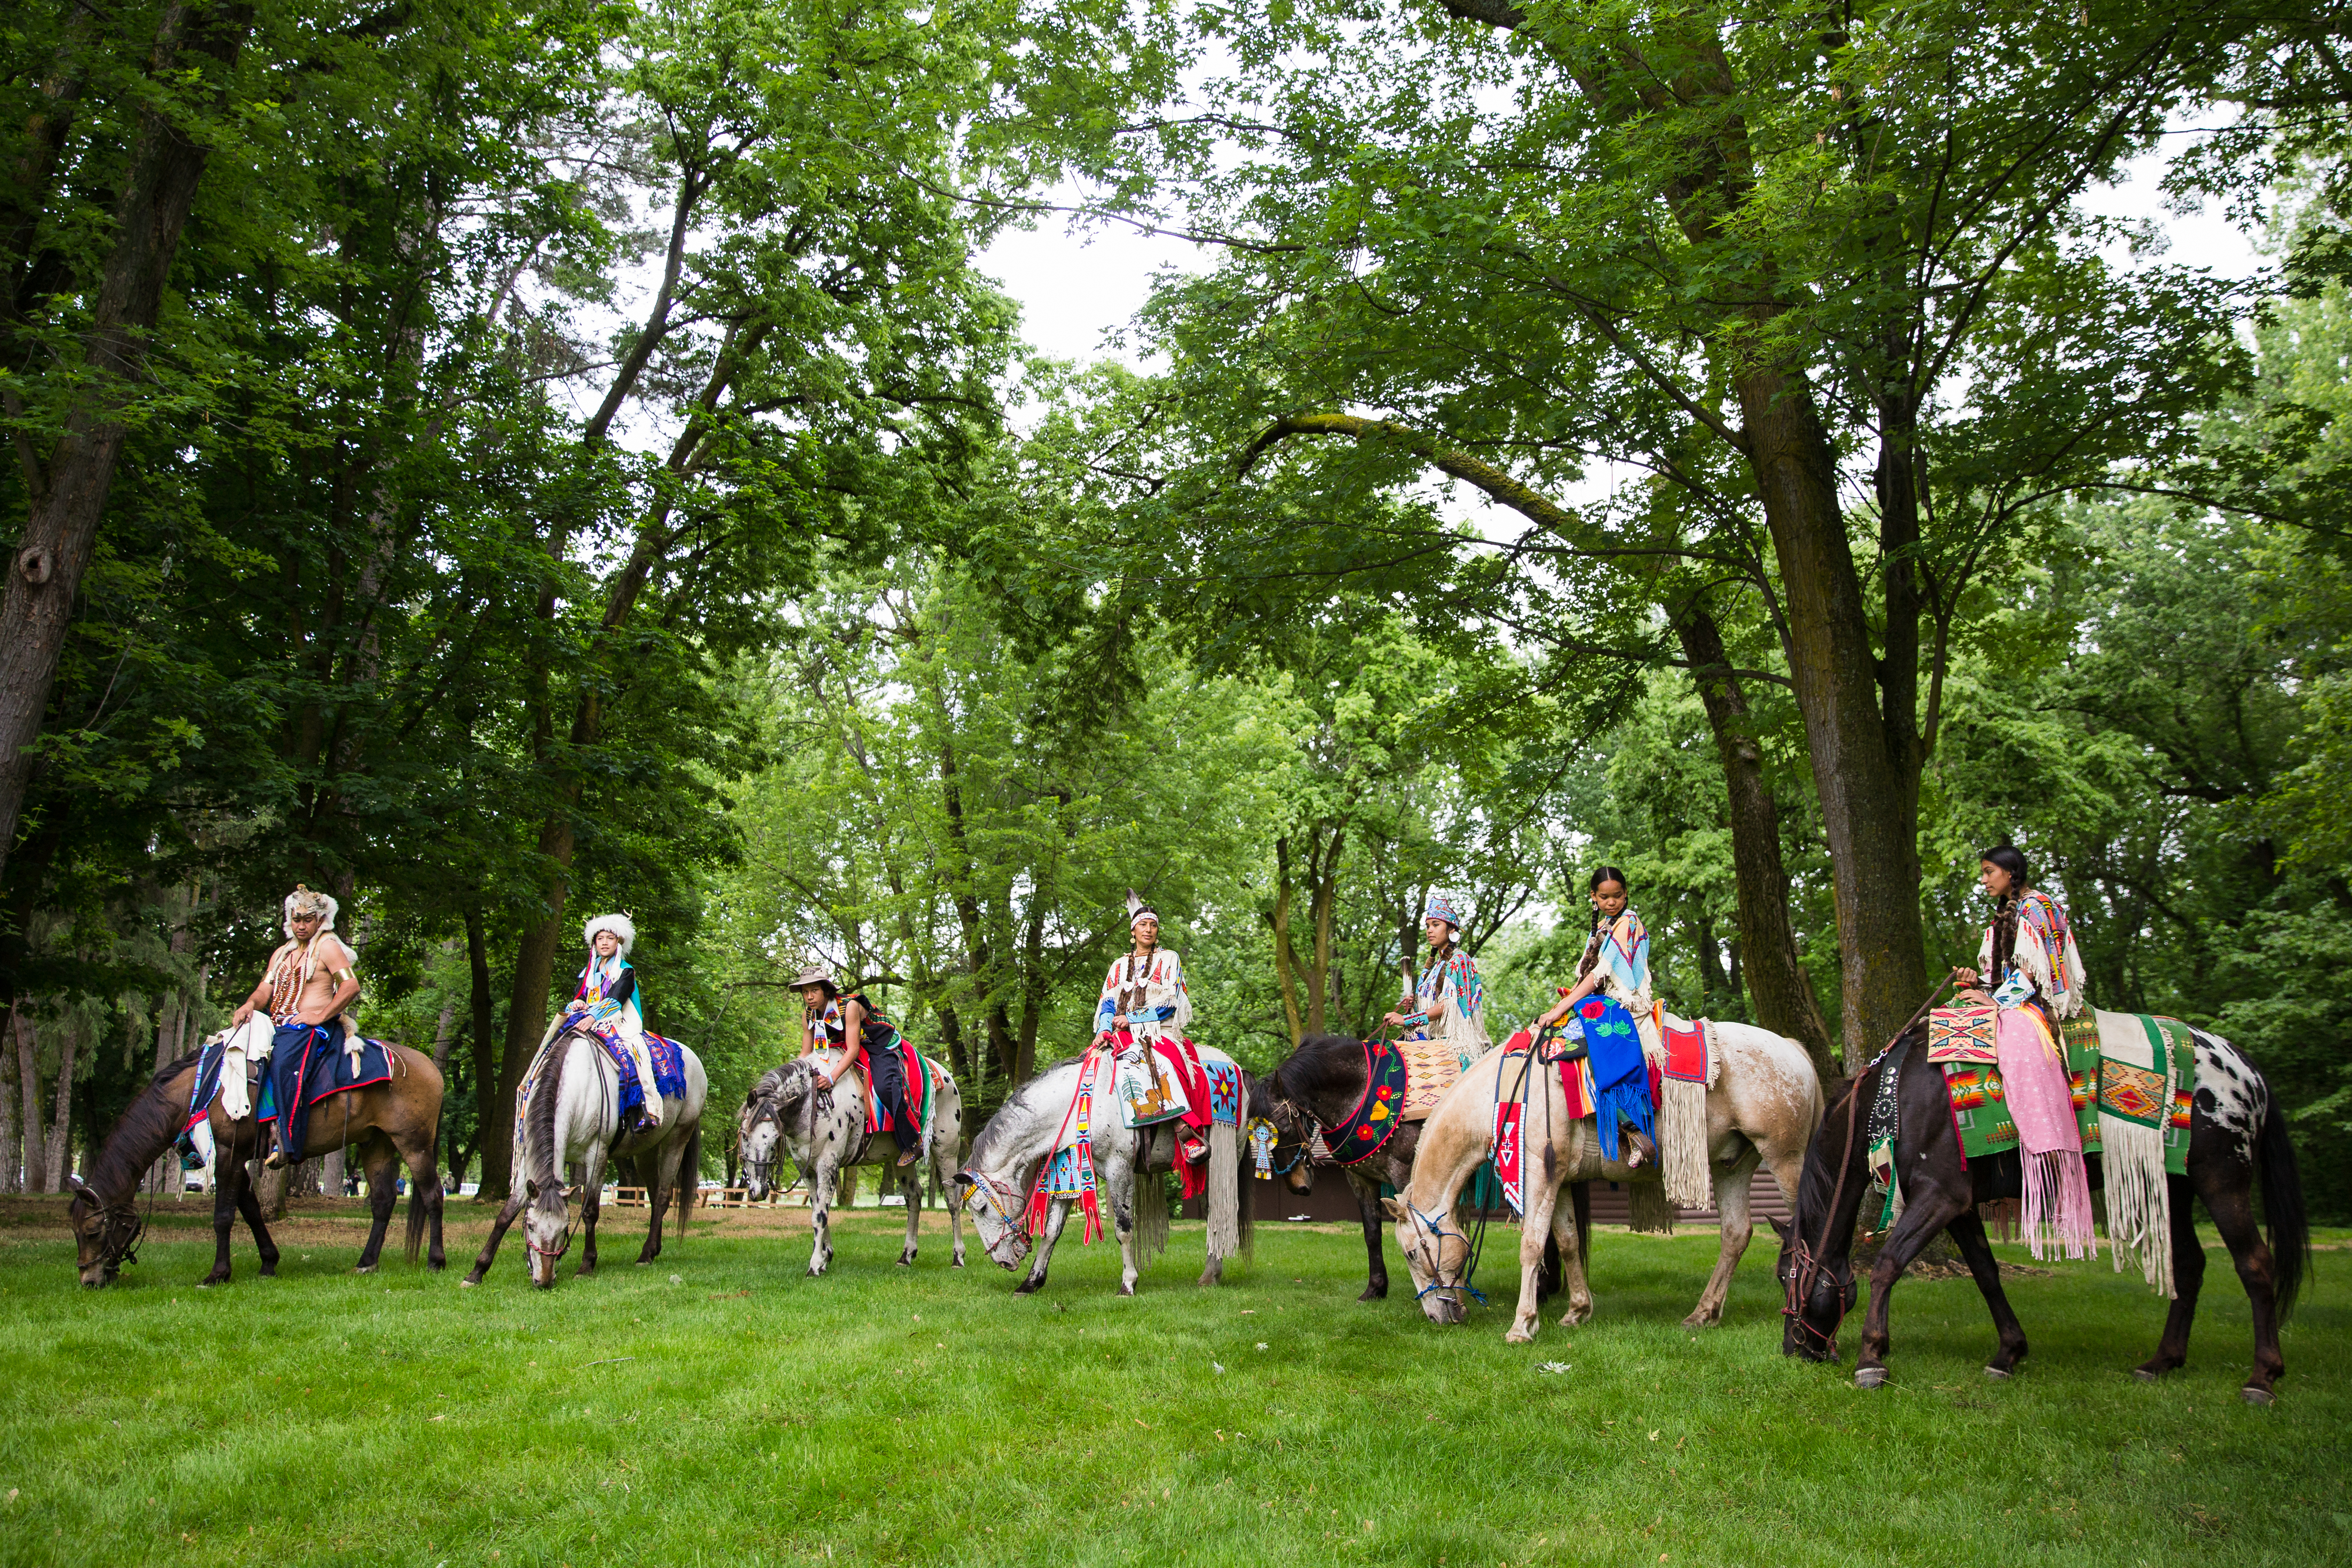 Horses and riders dressed in native regalia.